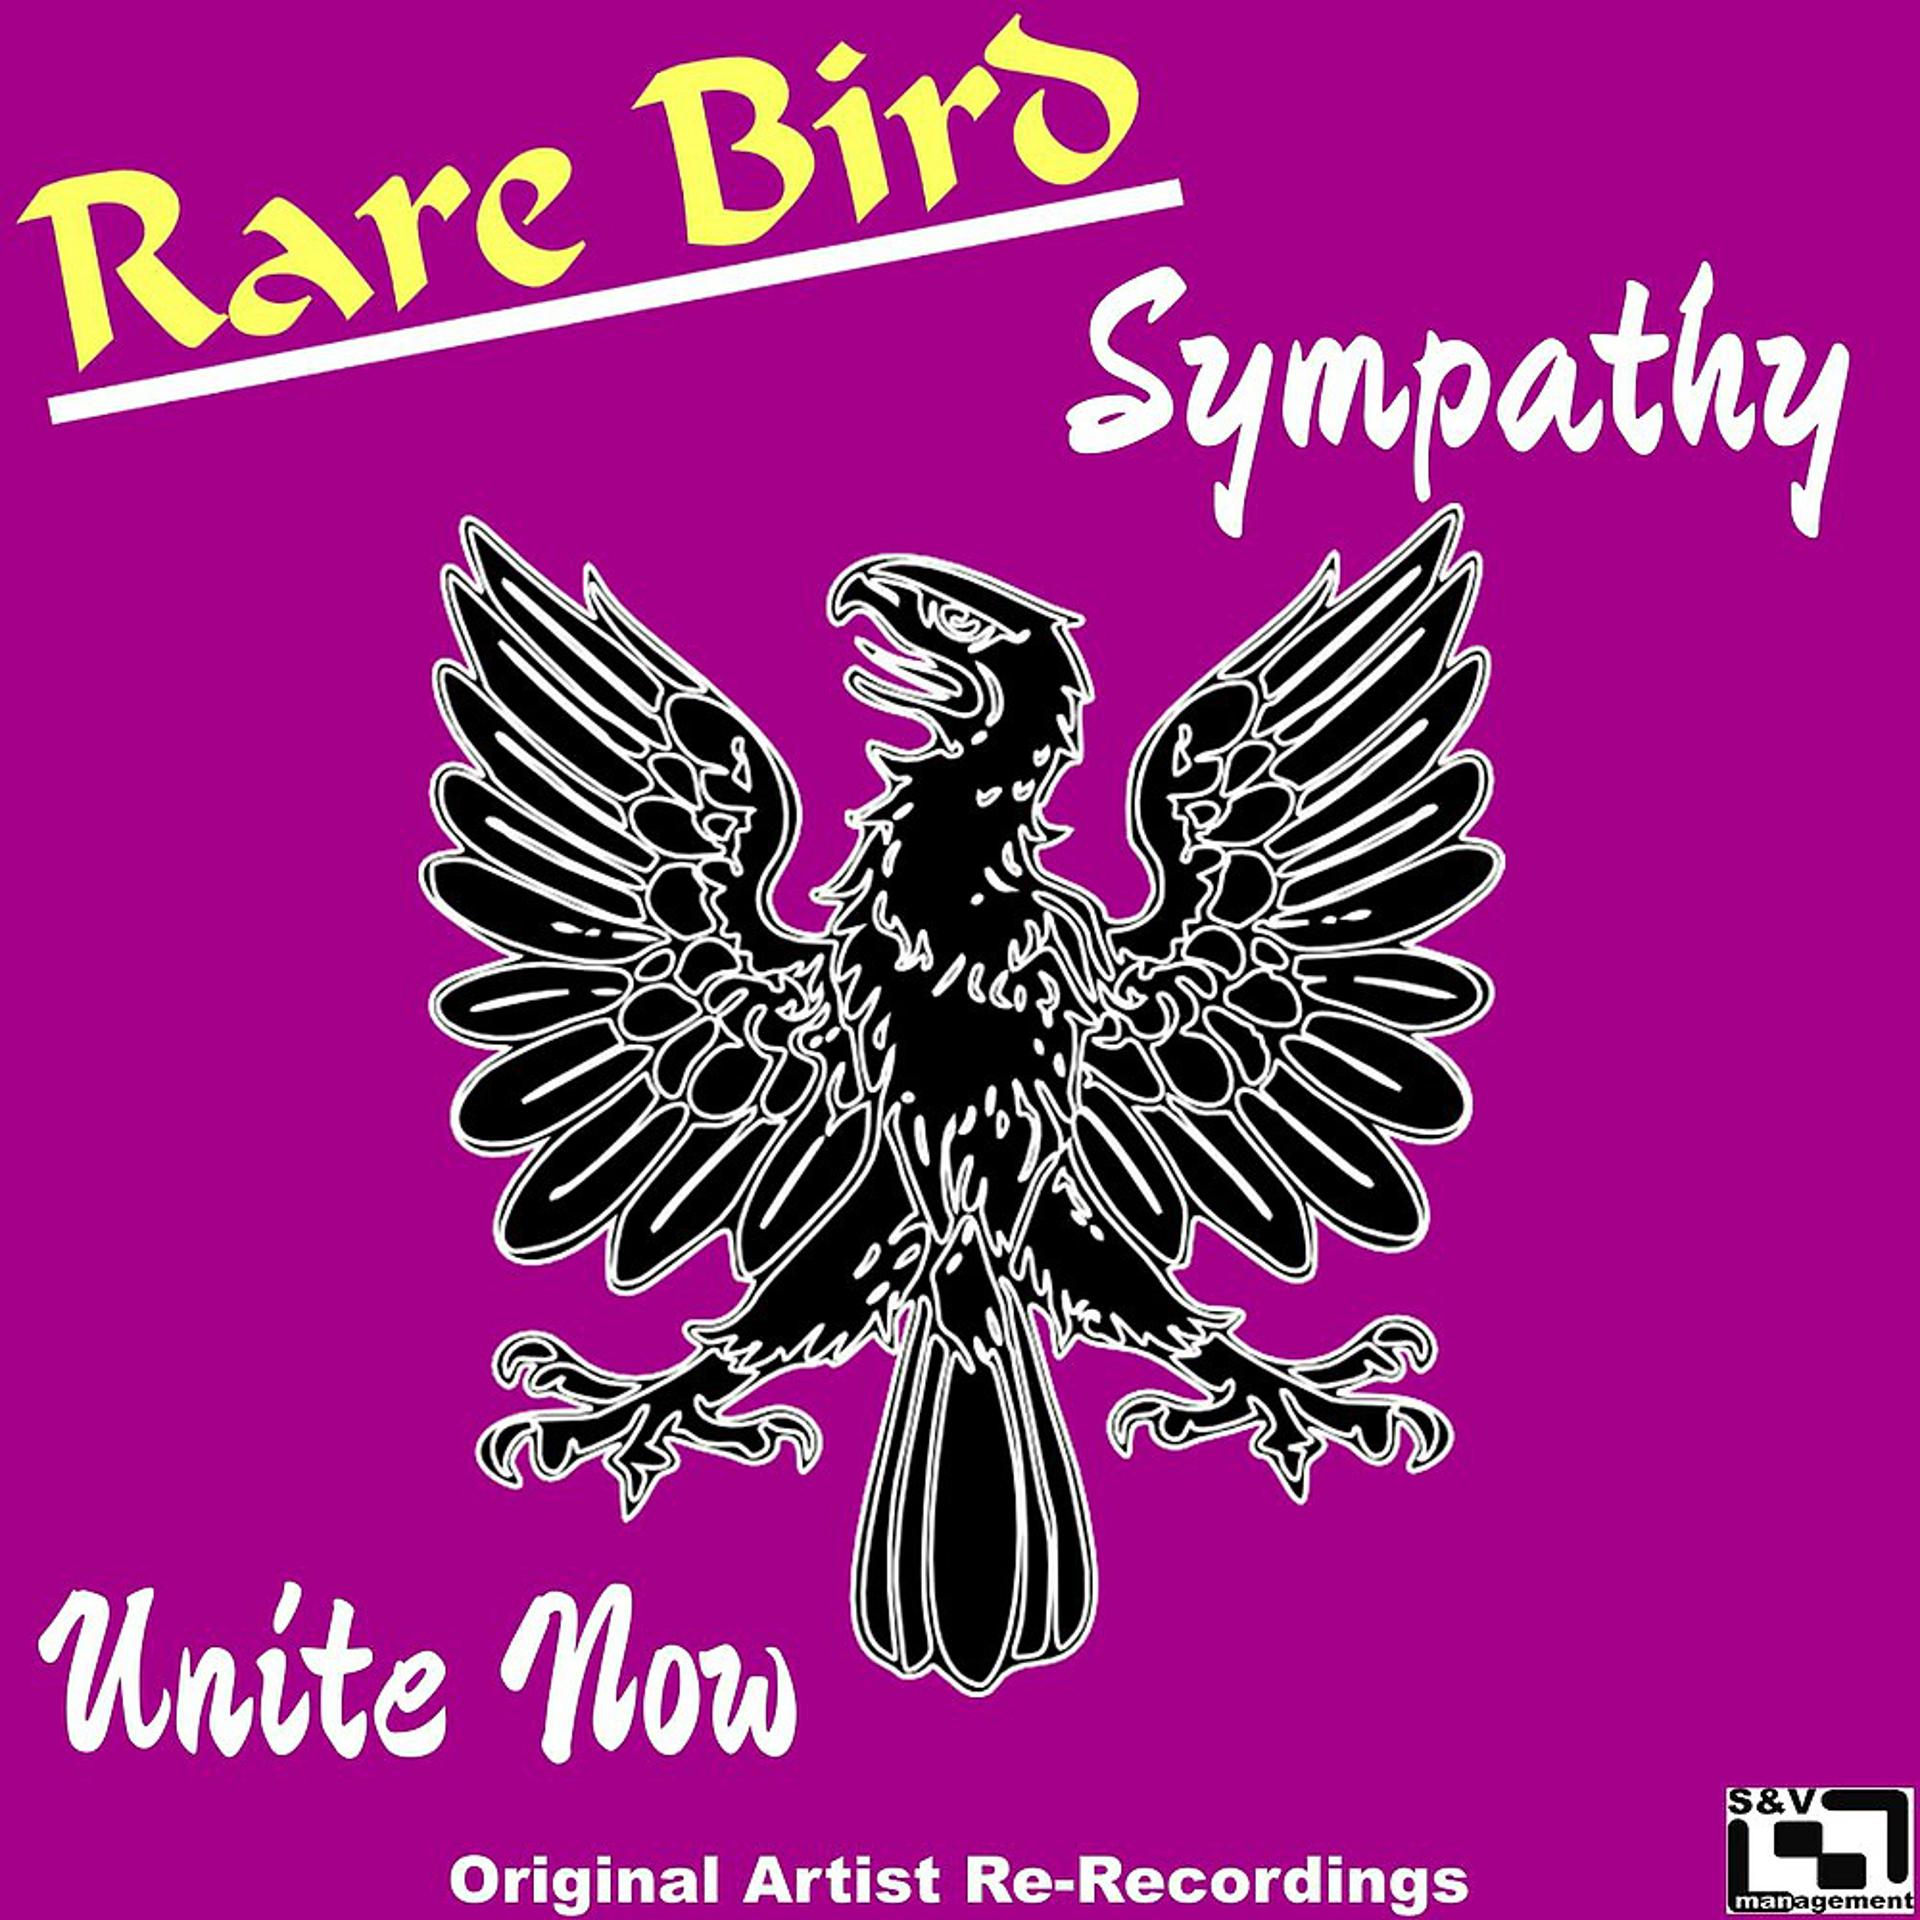 Sympathy rare Bird. Sympathy (rare Bird Song). Rare Bird Sympathy обложка. Versailles - Lyrical Sympathy. Birds unity